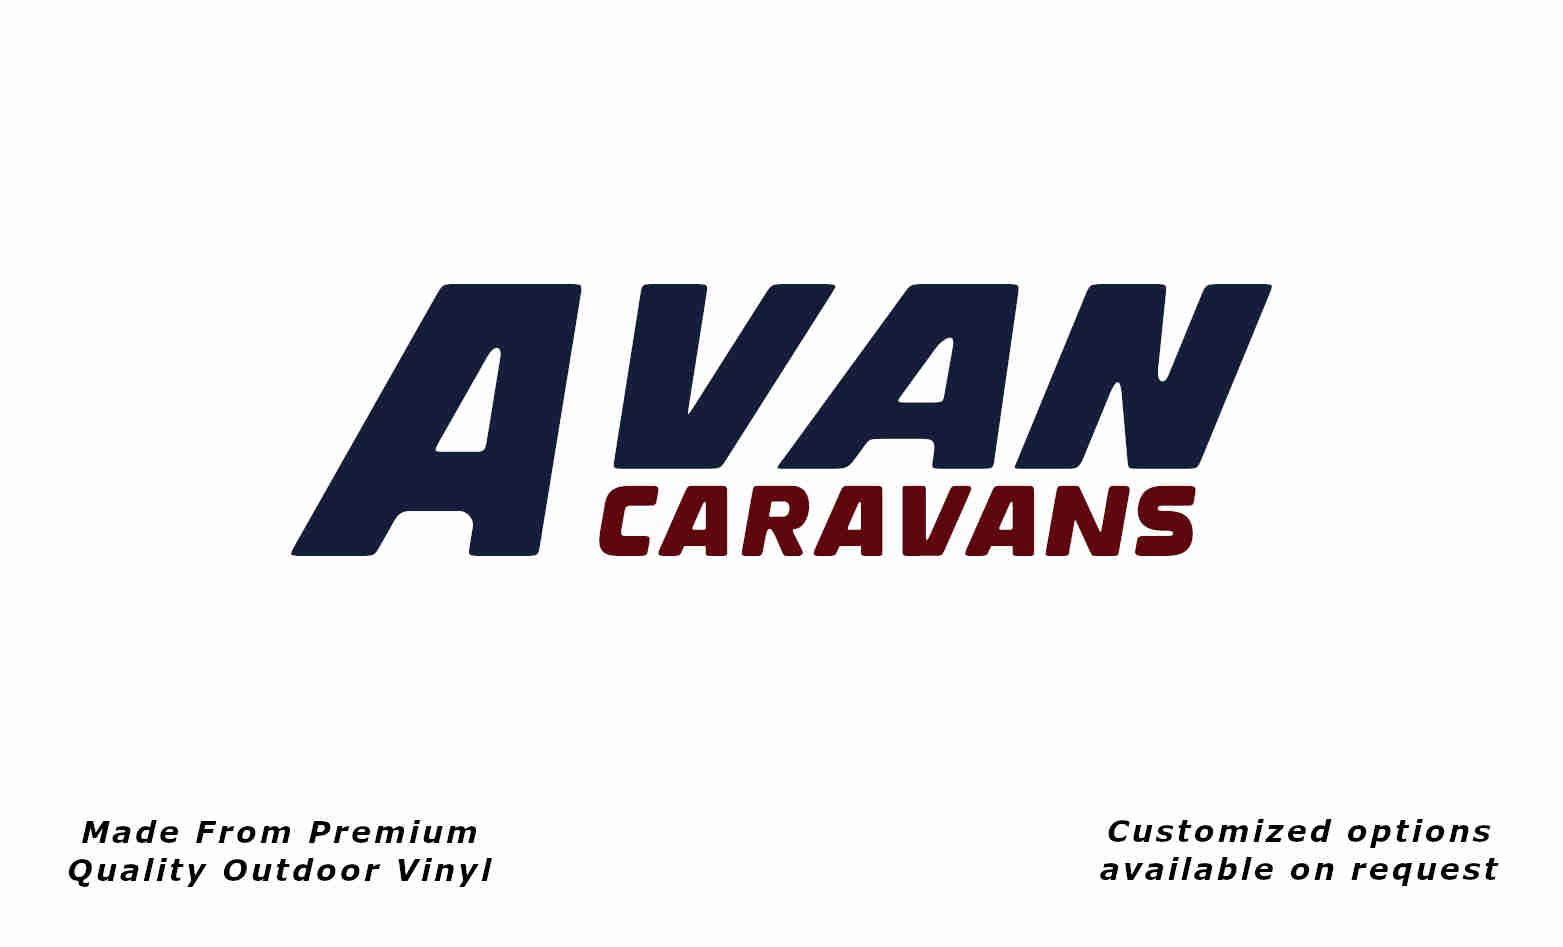 Avan caravans replacement vinyl decal sticker in deep sea blue and purple red.